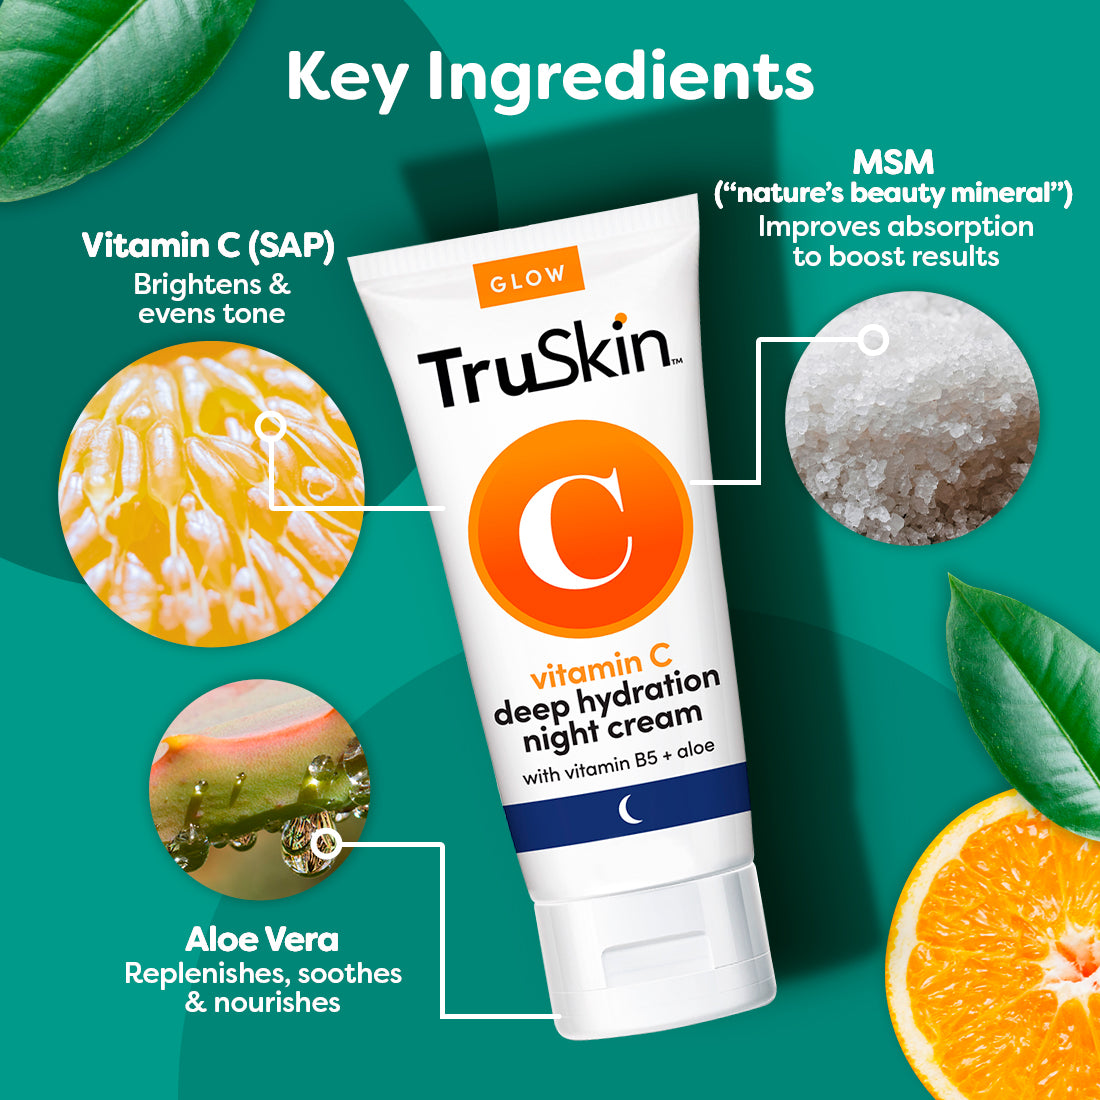 TruSkin Vitamin C Deep Hydration Night Cream